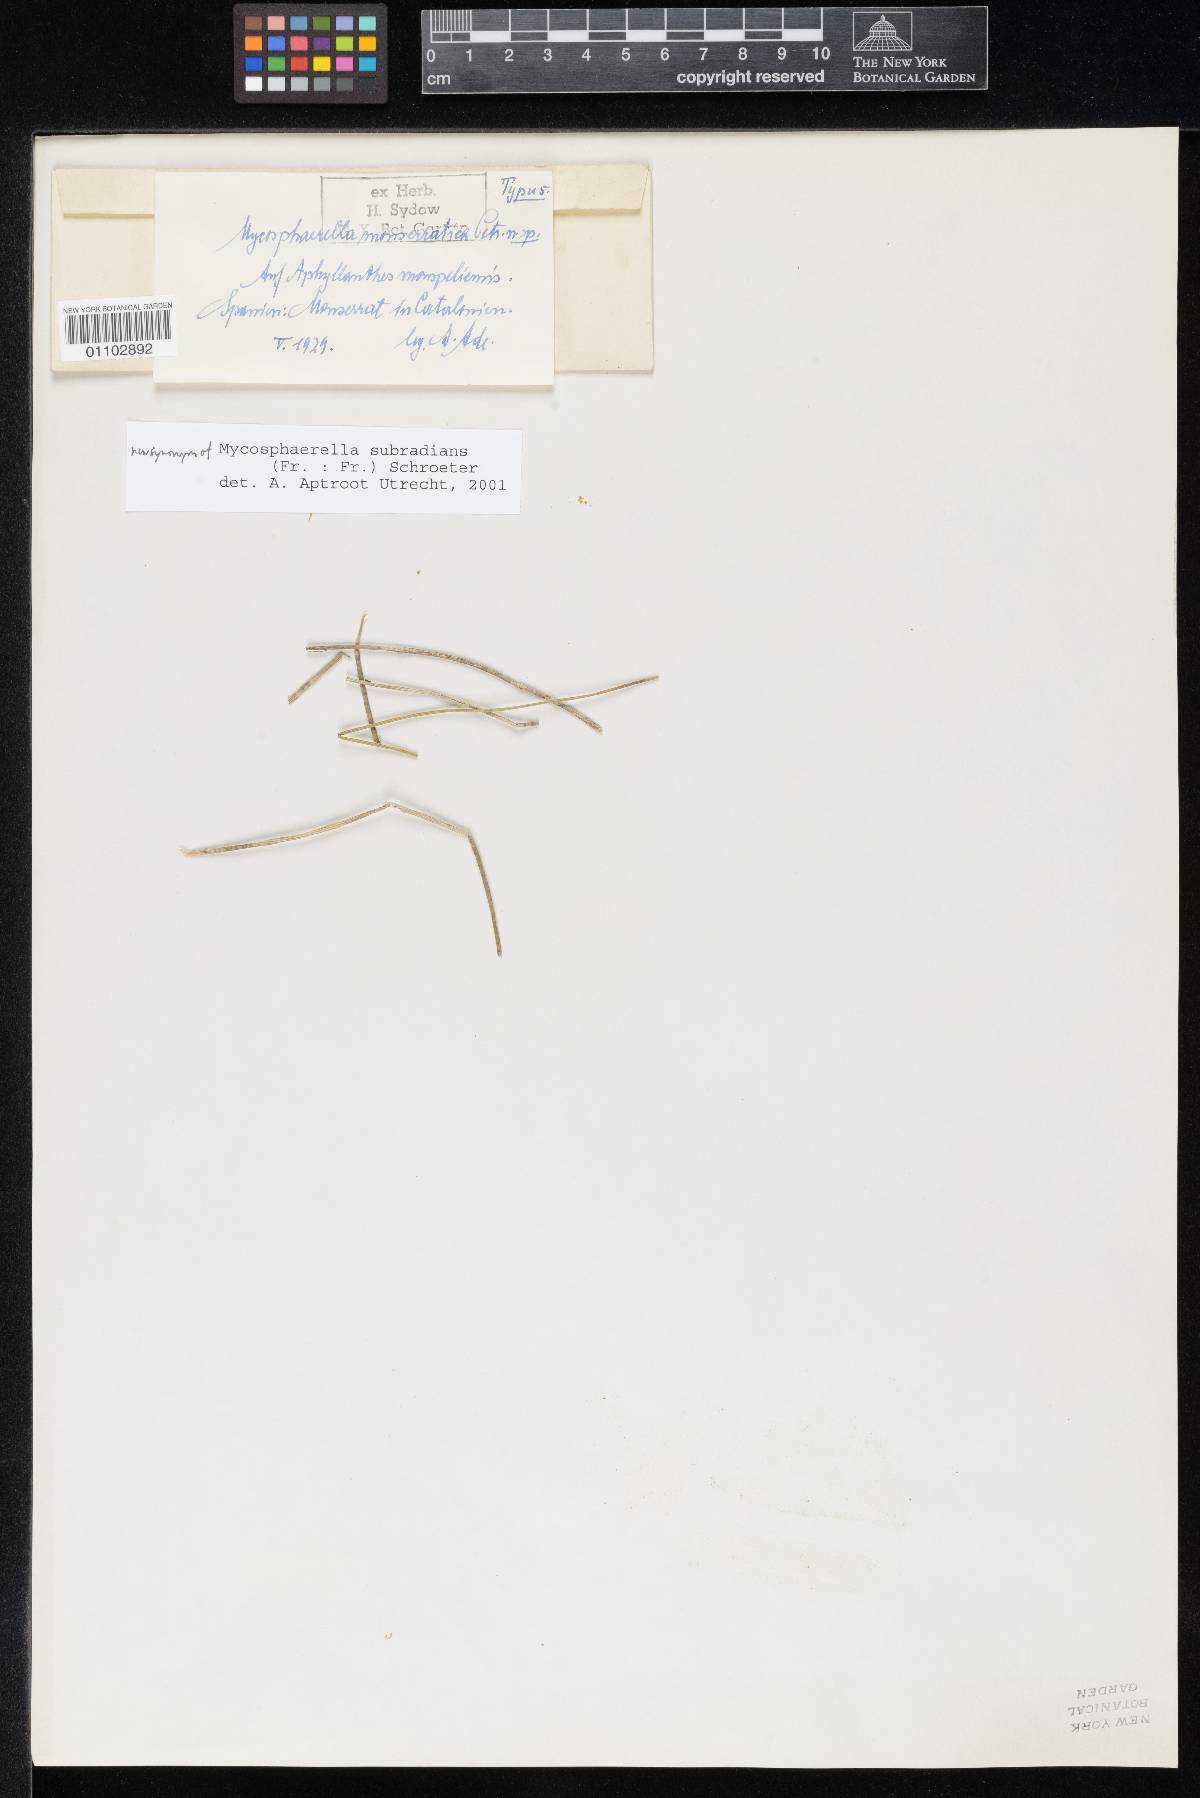 Mycosphaerella monserratica image